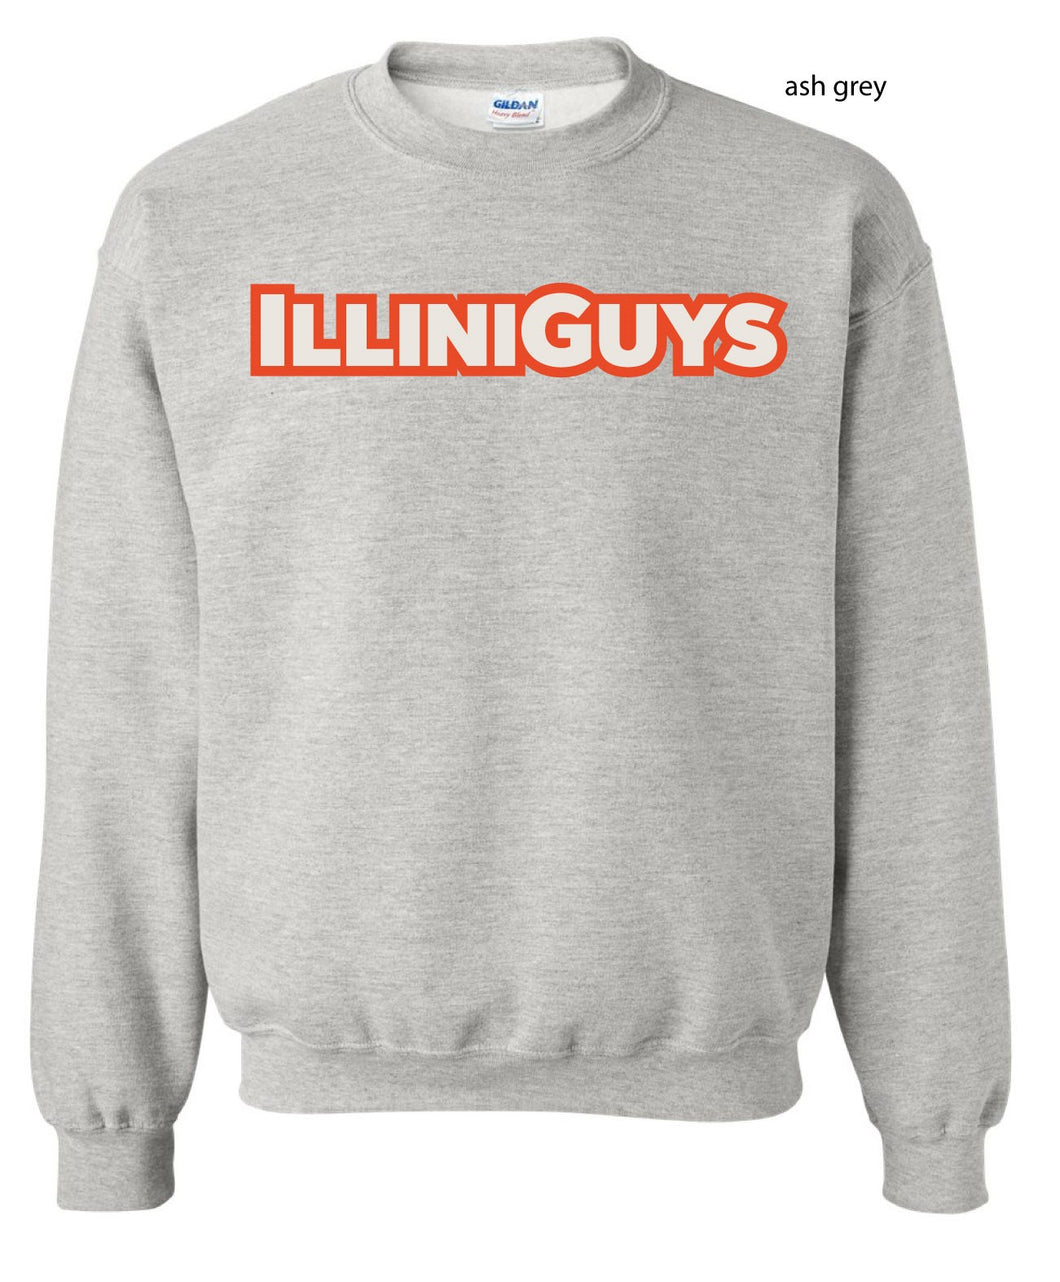 IlliniGuys sweatshirt